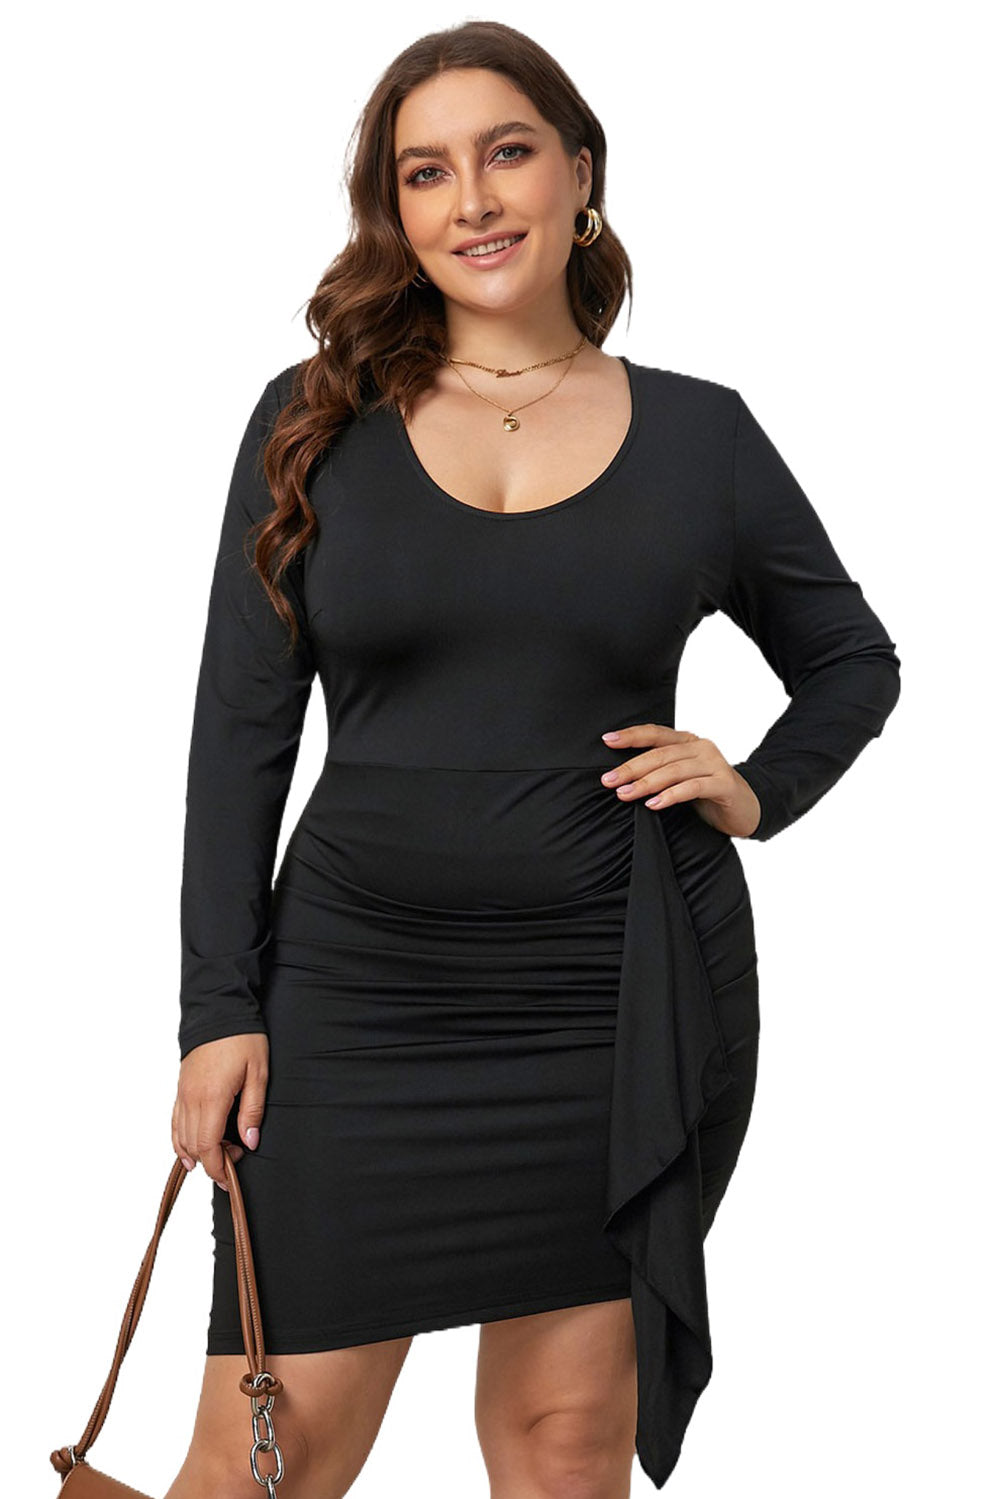 Black Bodycon V Neck Long Sleeve Plus Size Dress Cocktail Pencil Dress